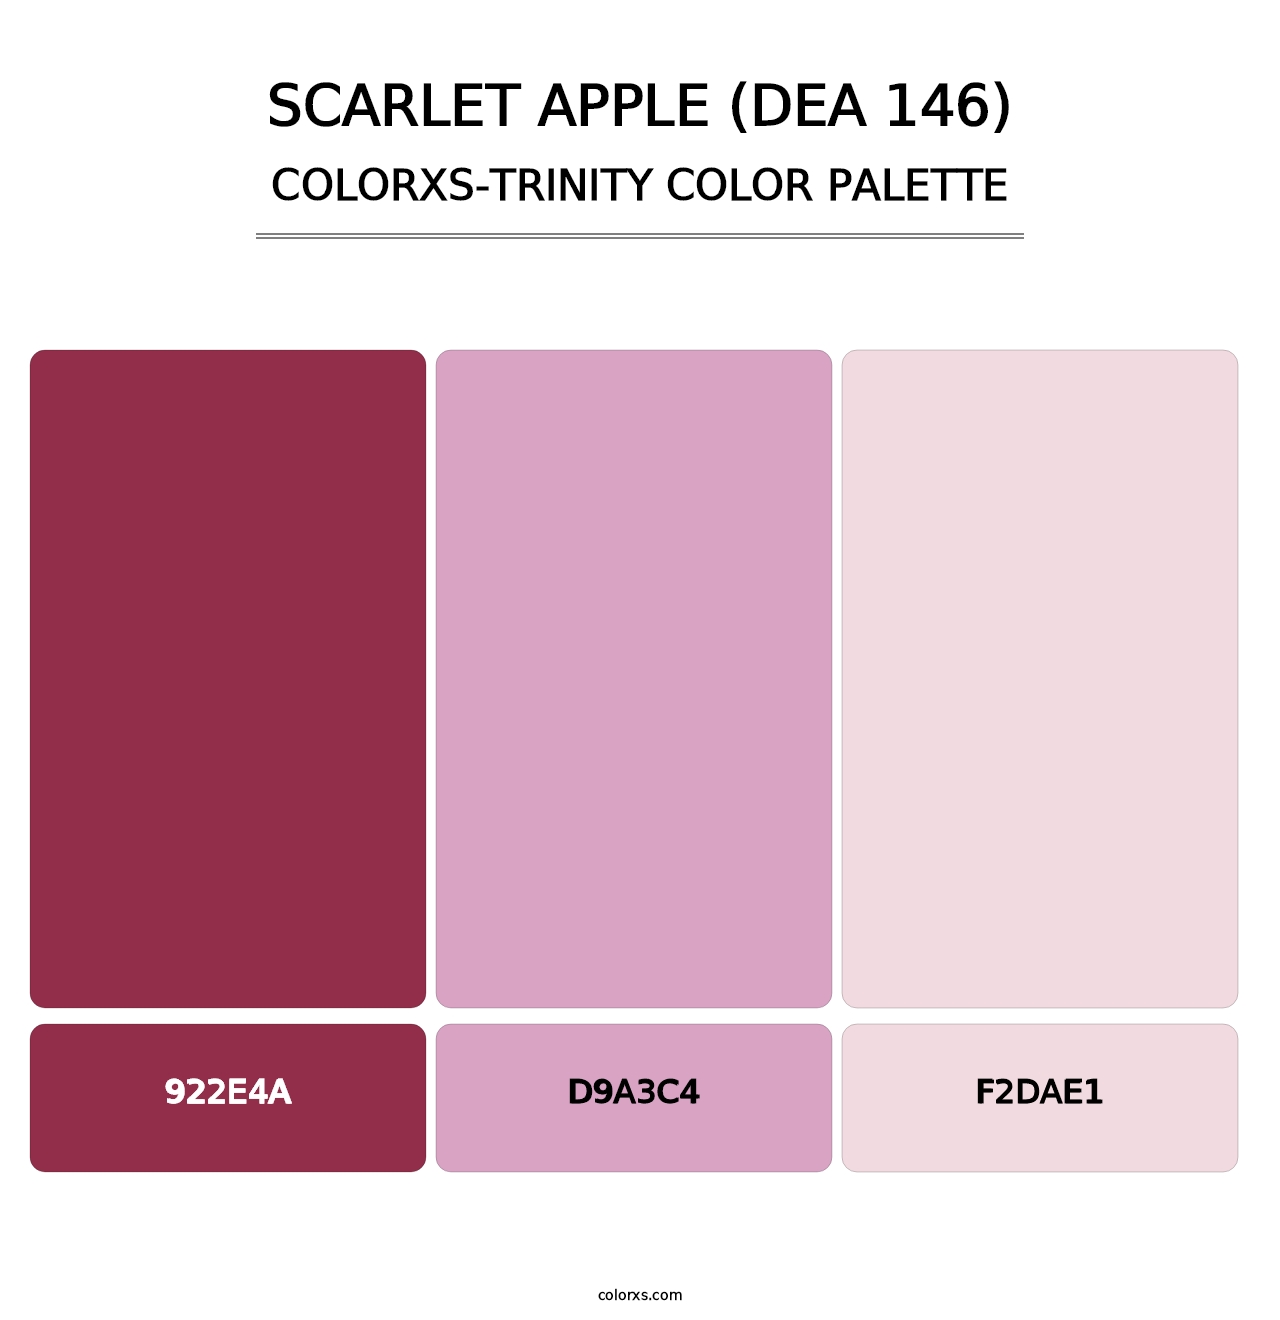 Scarlet Apple (DEA 146) - Colorxs Trinity Palette